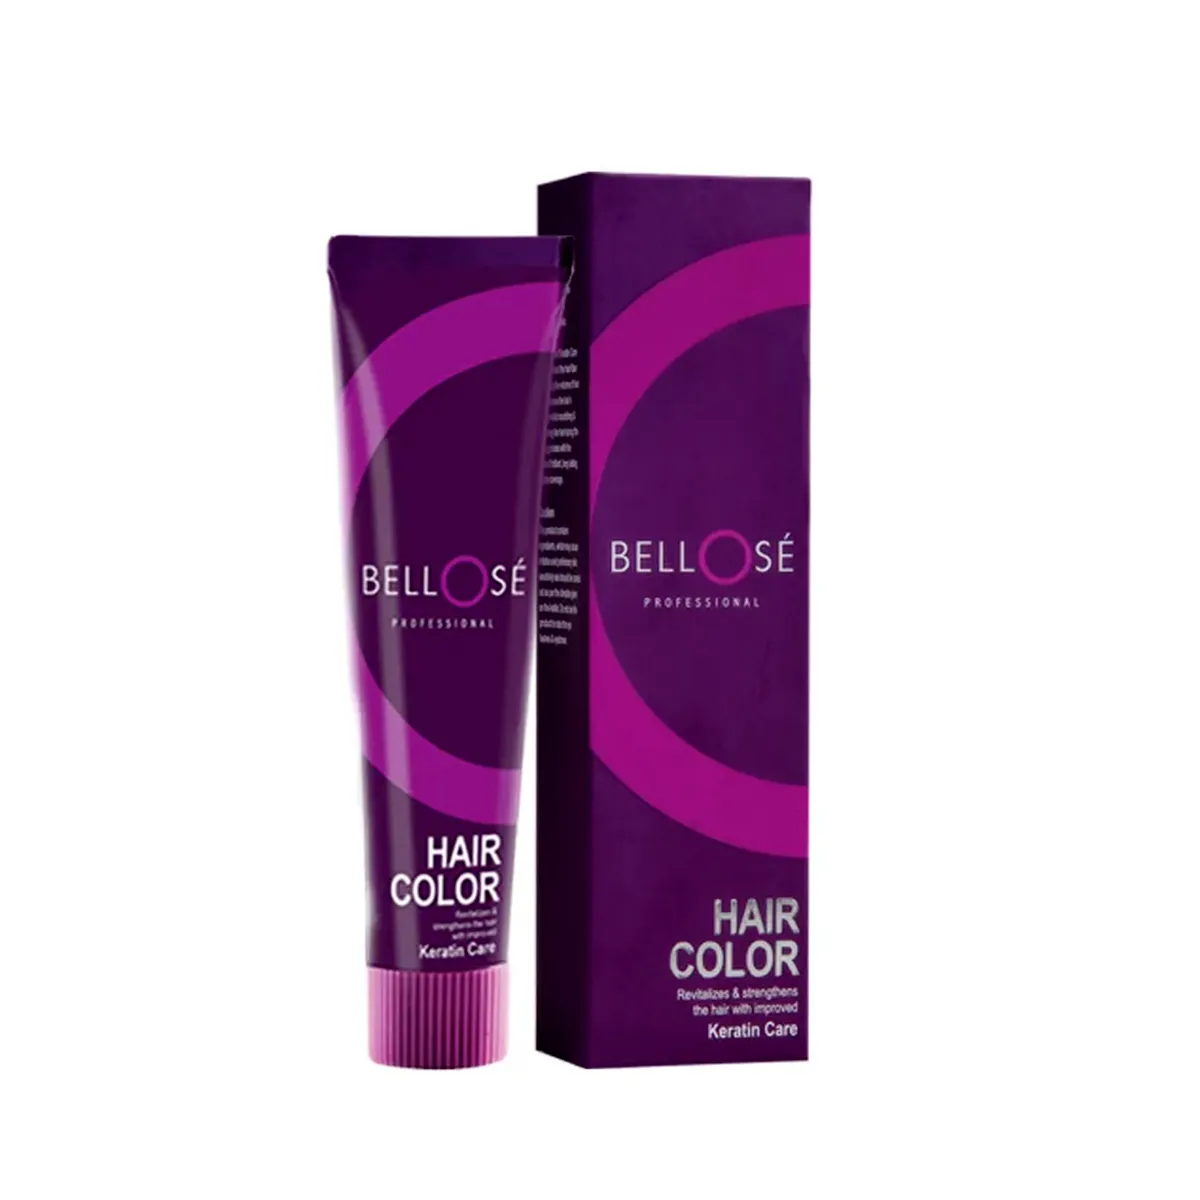 Bellose Hair Color 2.0 60ml